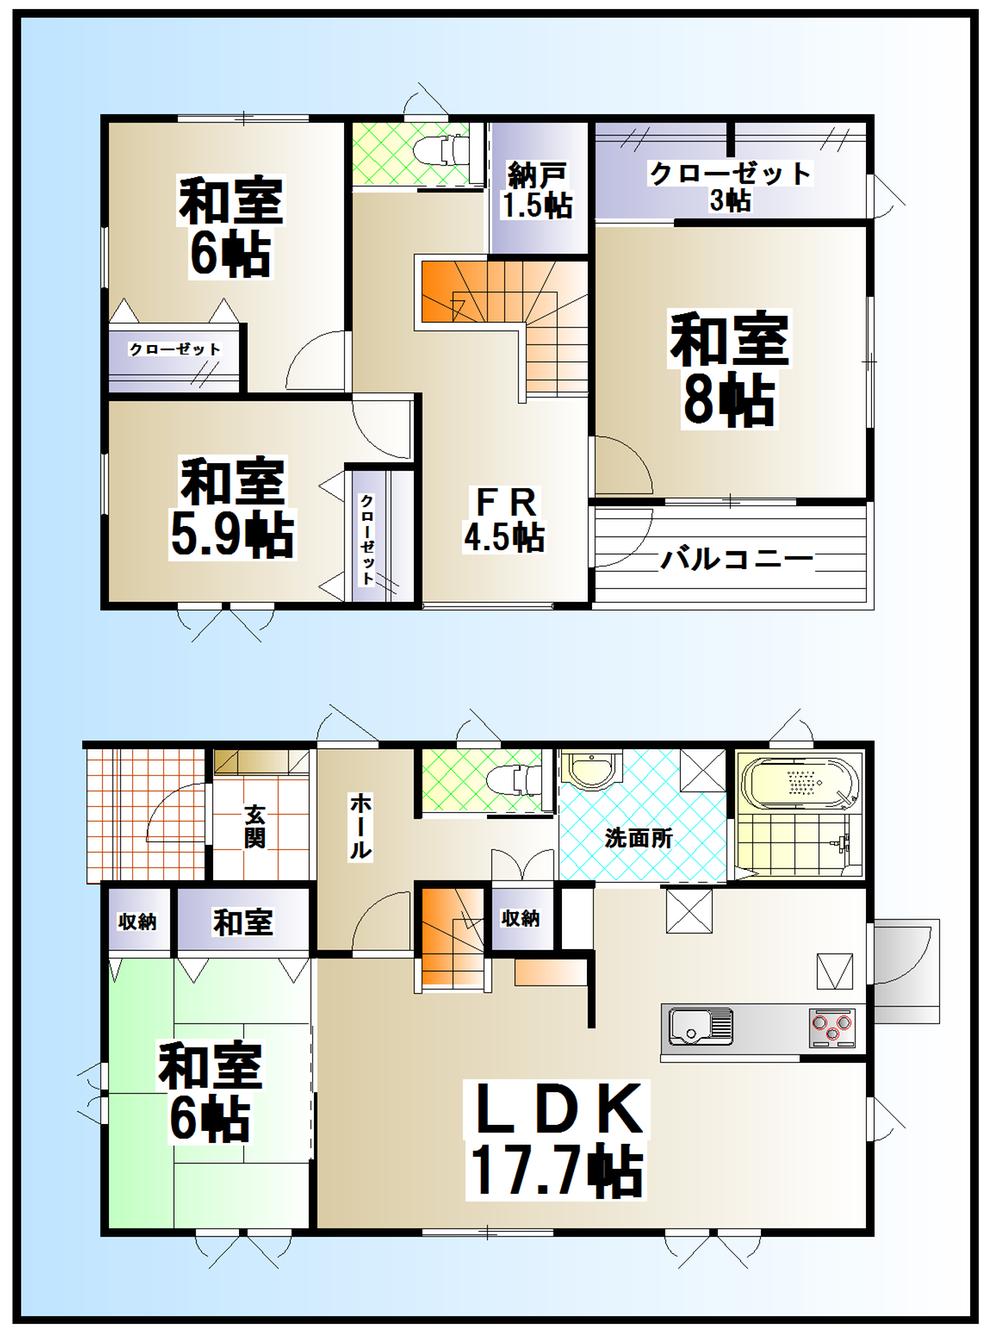 Floor plan. 52,800,000 yen, 4LDK, Land area 201 sq m , Building area 120.06 sq m